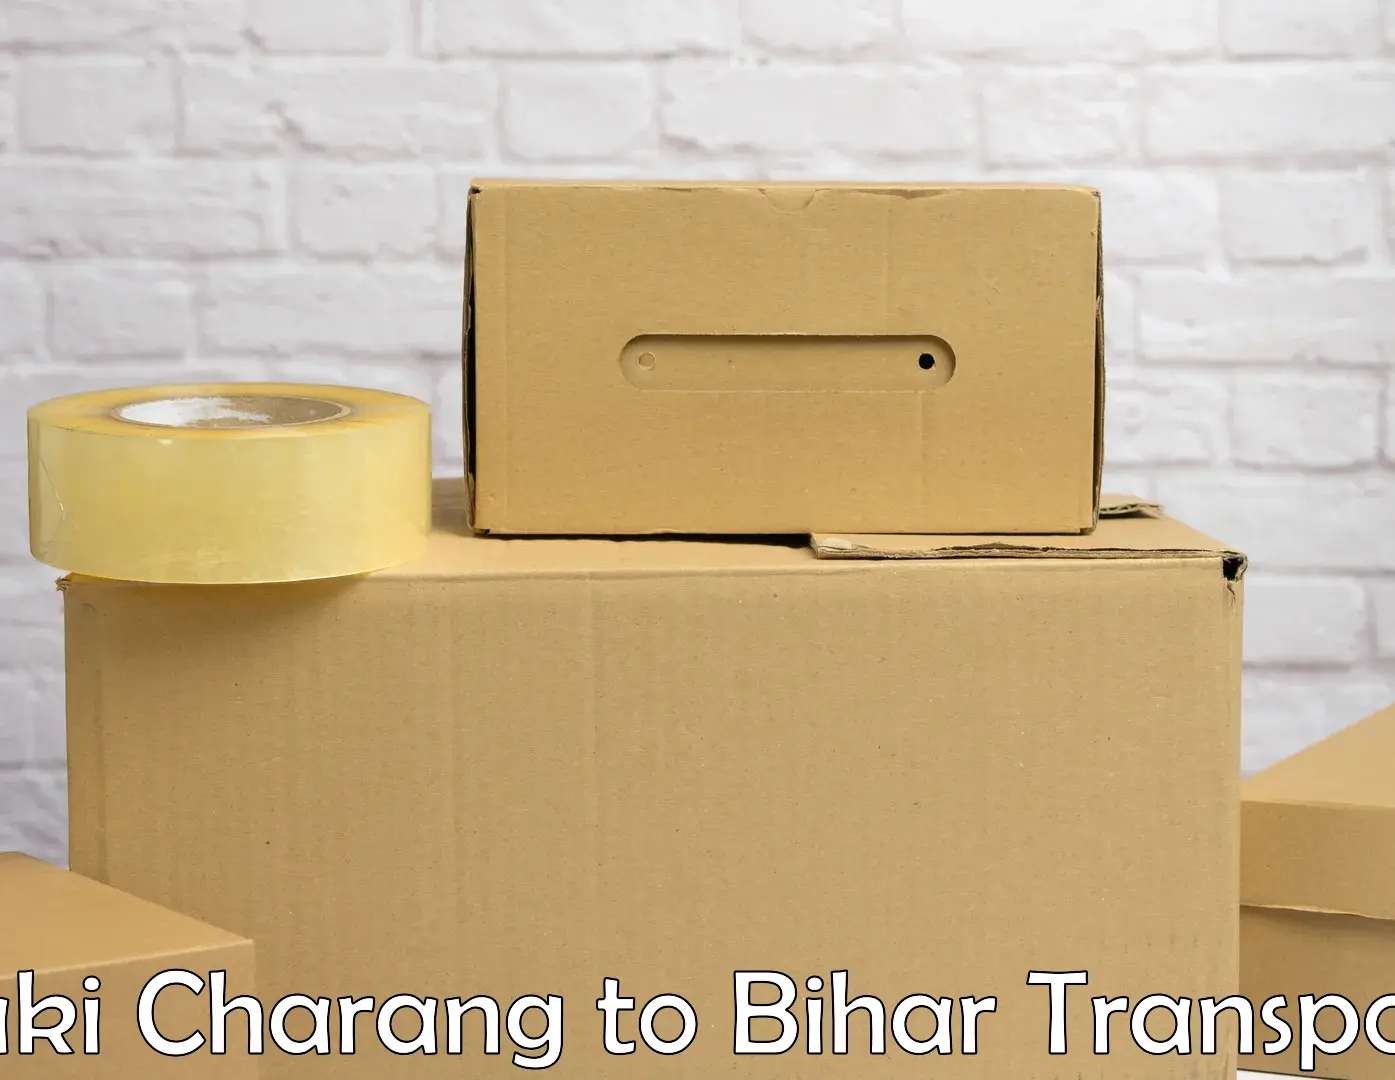 Transport shared services Saki Charang to Aurangabad Bihar